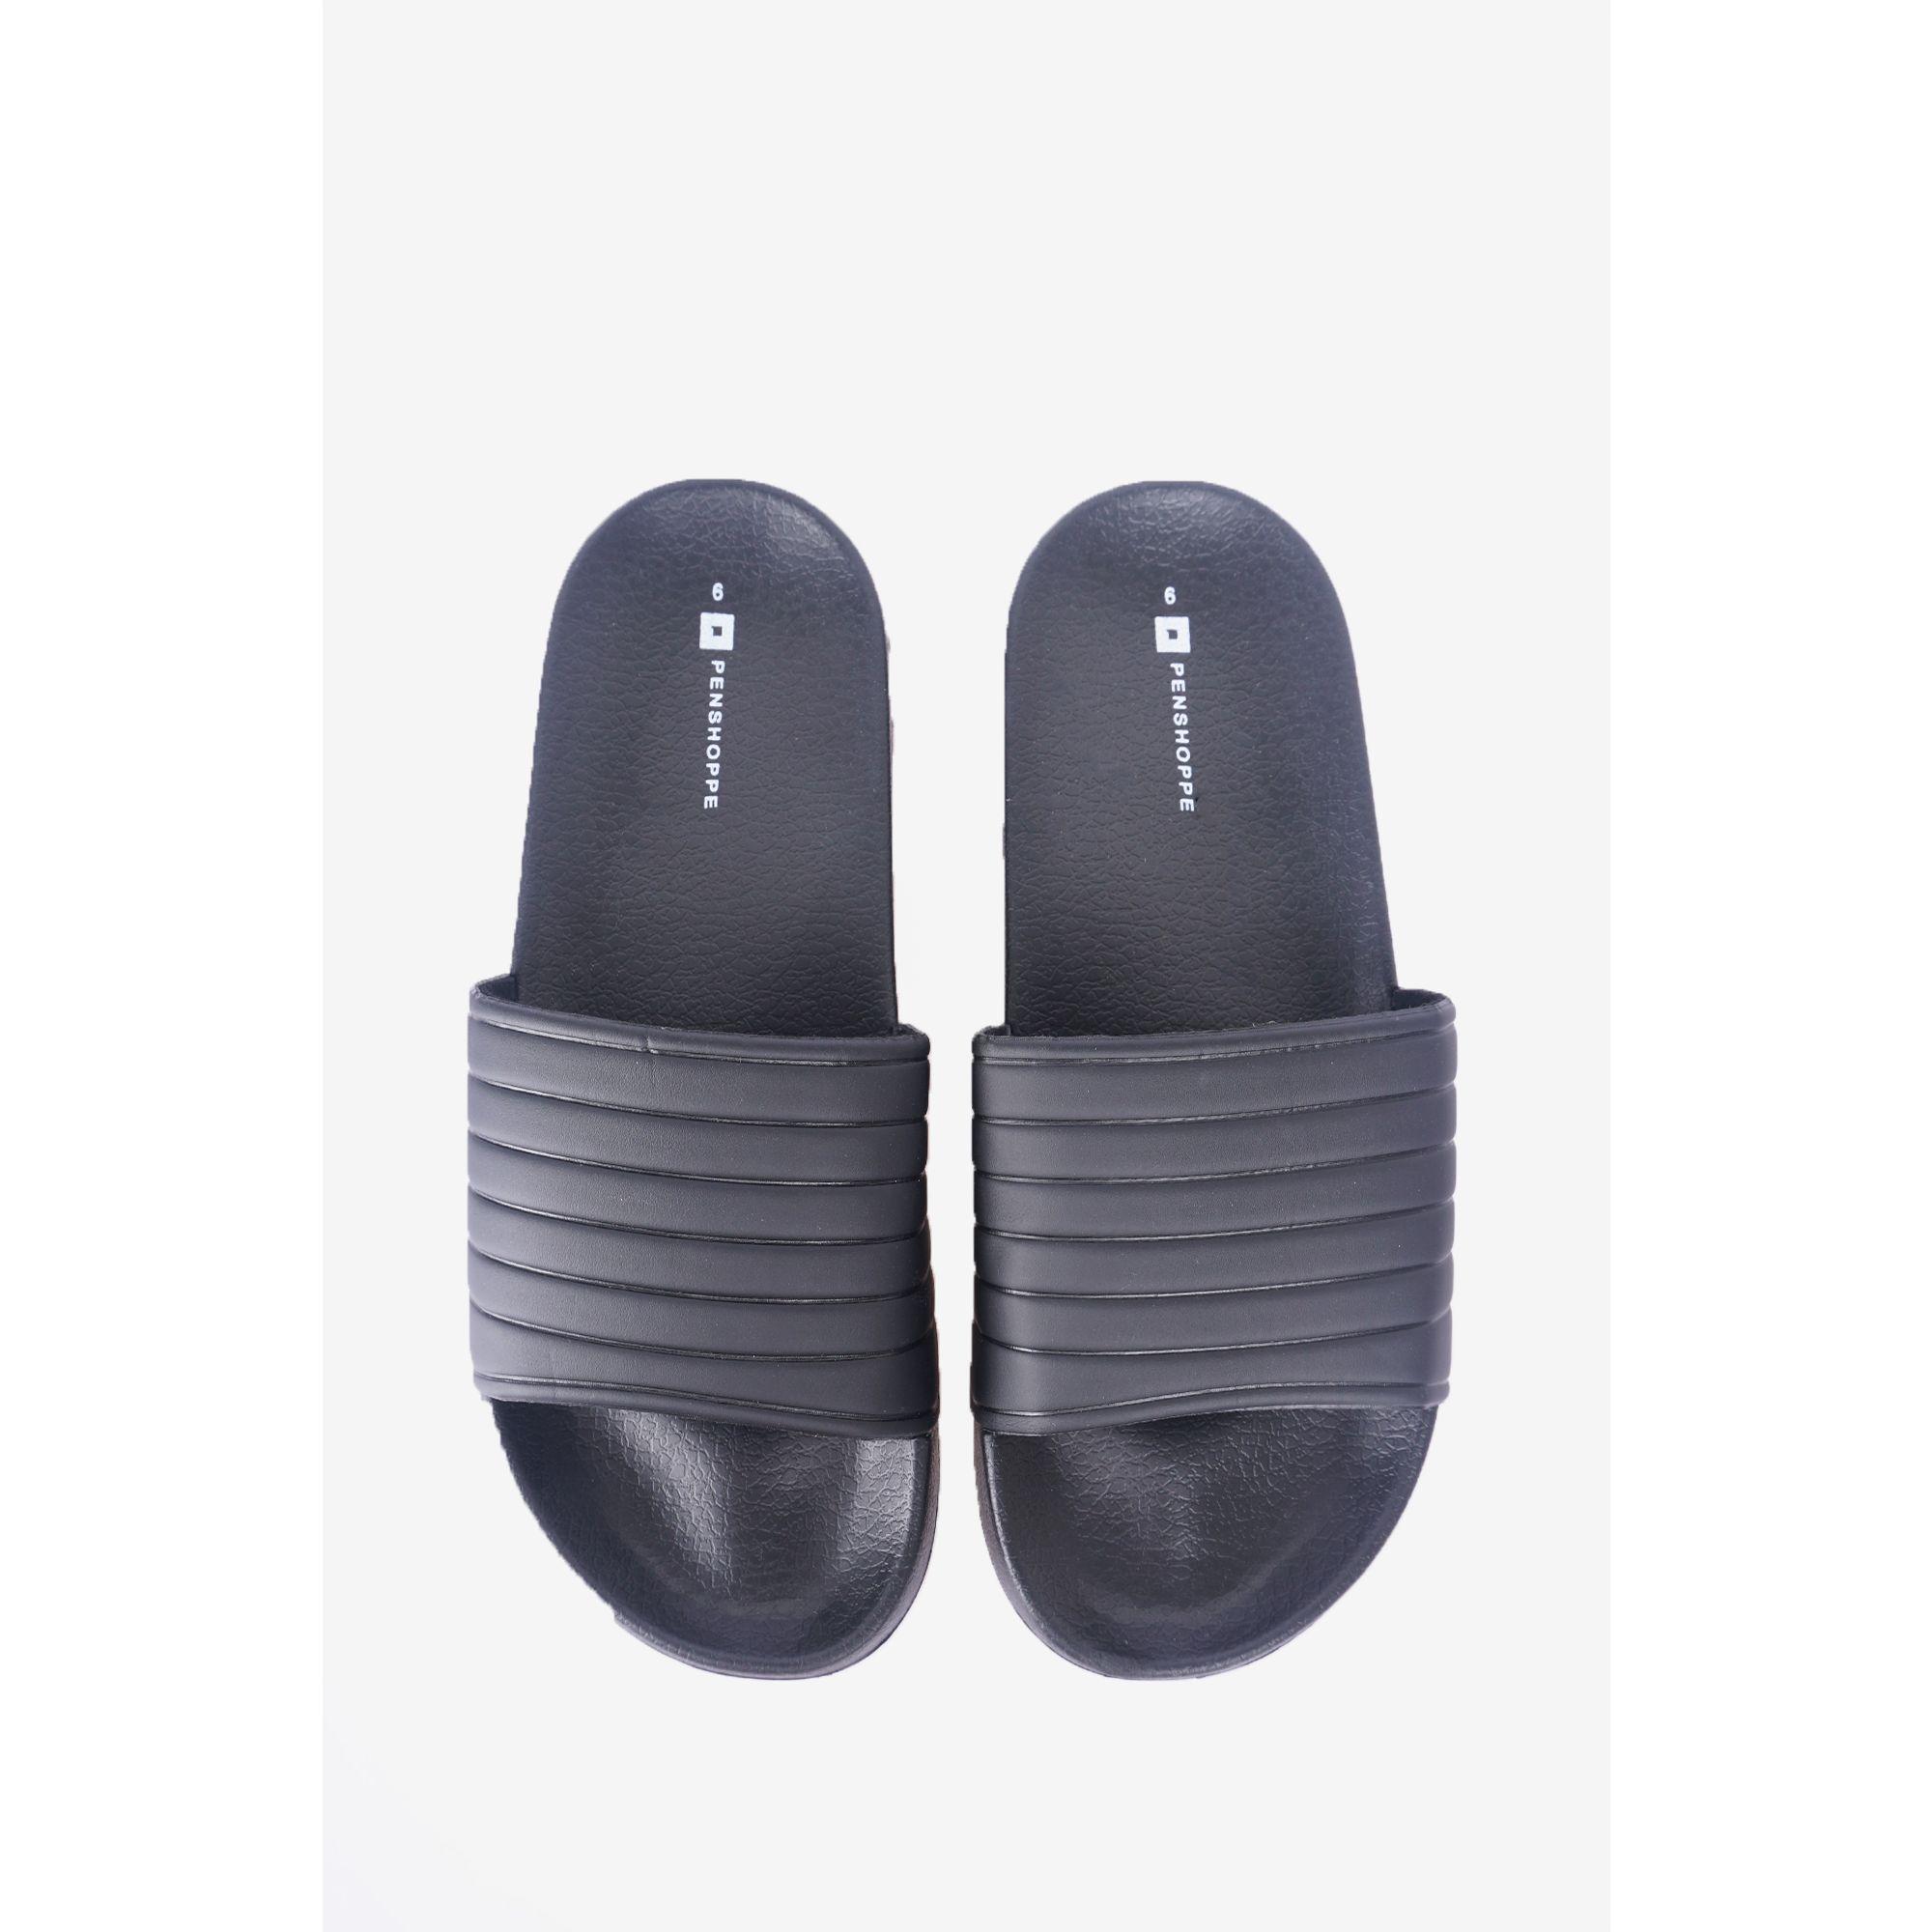 penshoppe slippers size chart - Banabi